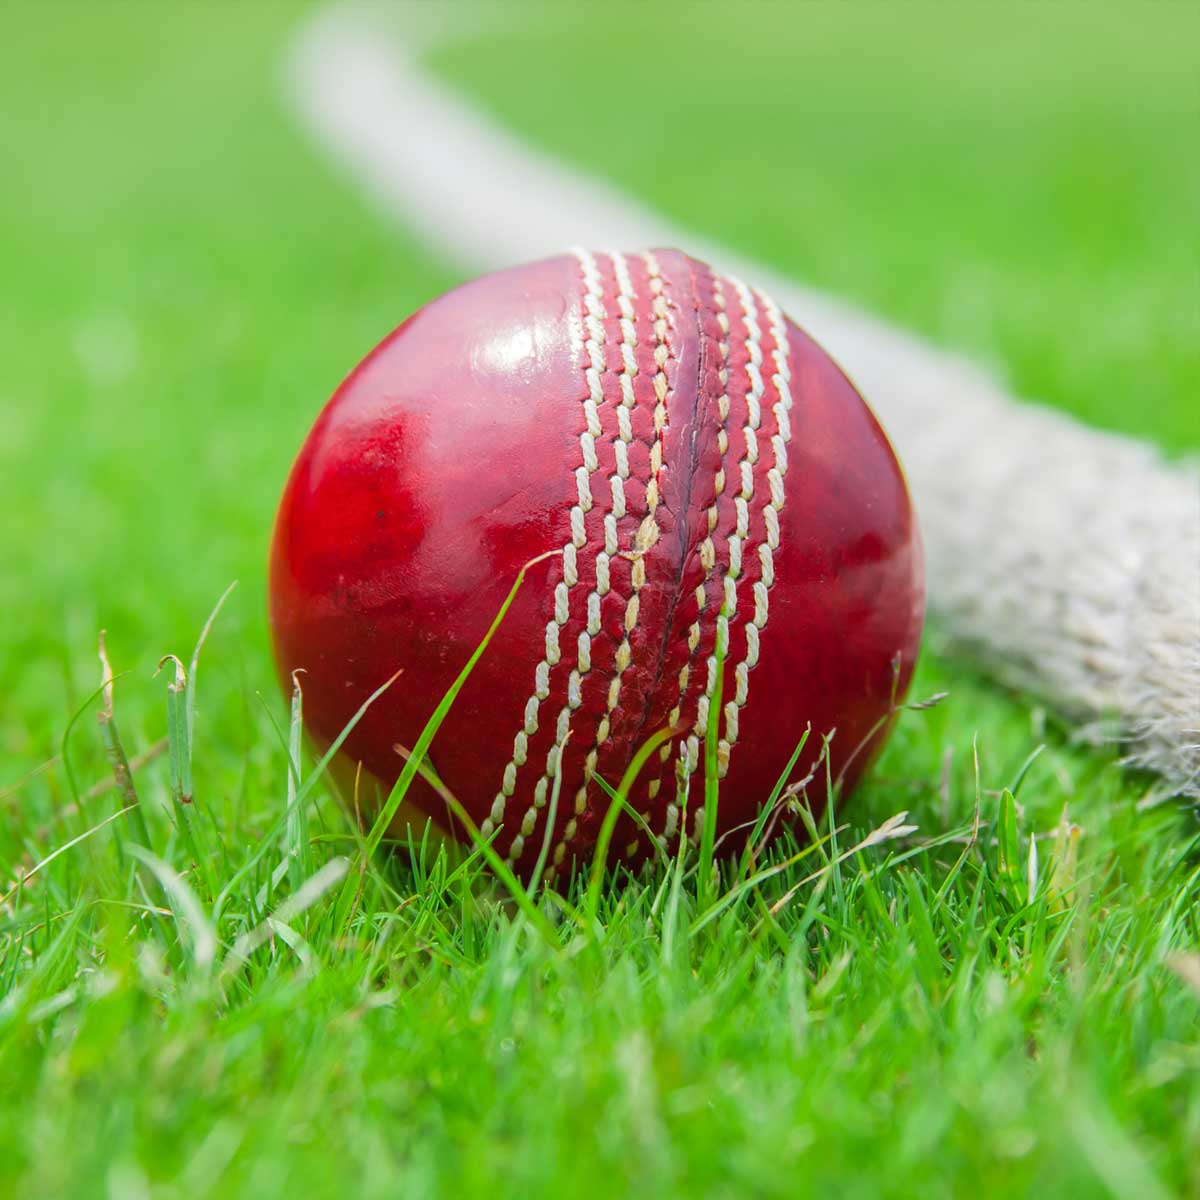 Cricket Balls Manufacturers in Chandler